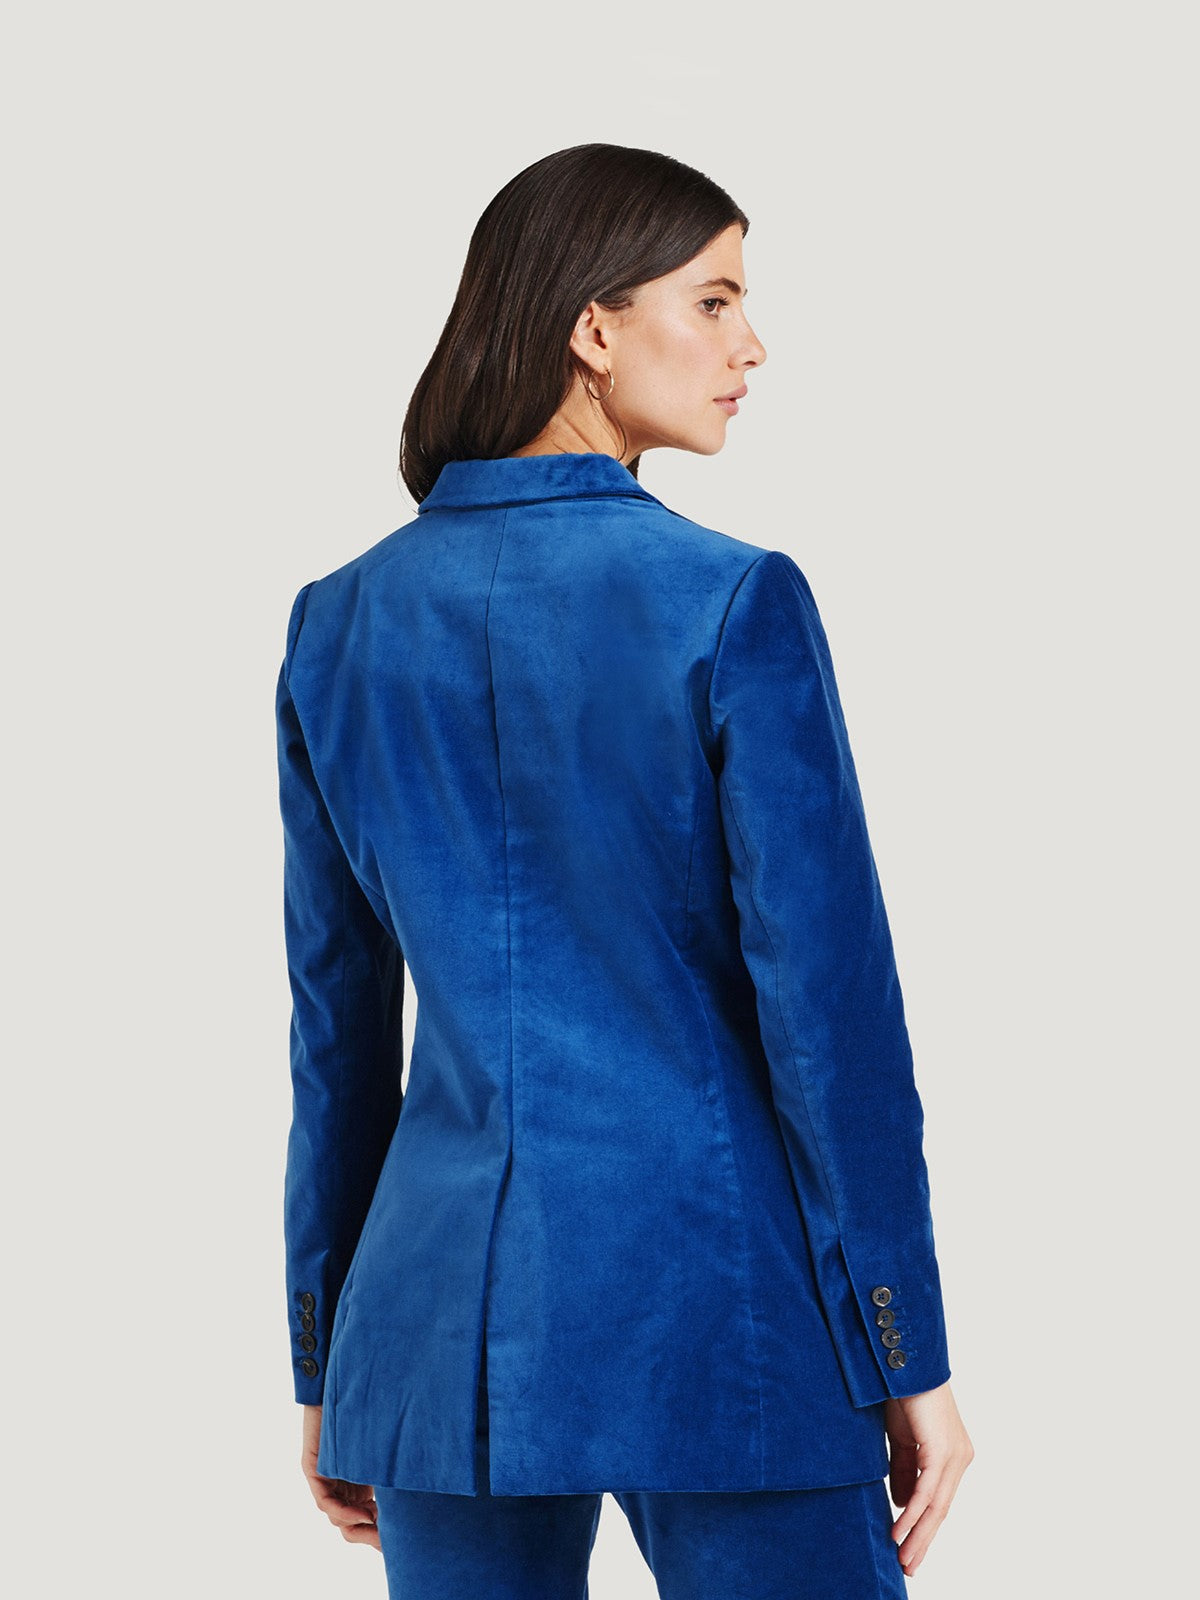 Alleegra Organic Cotton Velvet Jacket - Dark Sapphire Blue